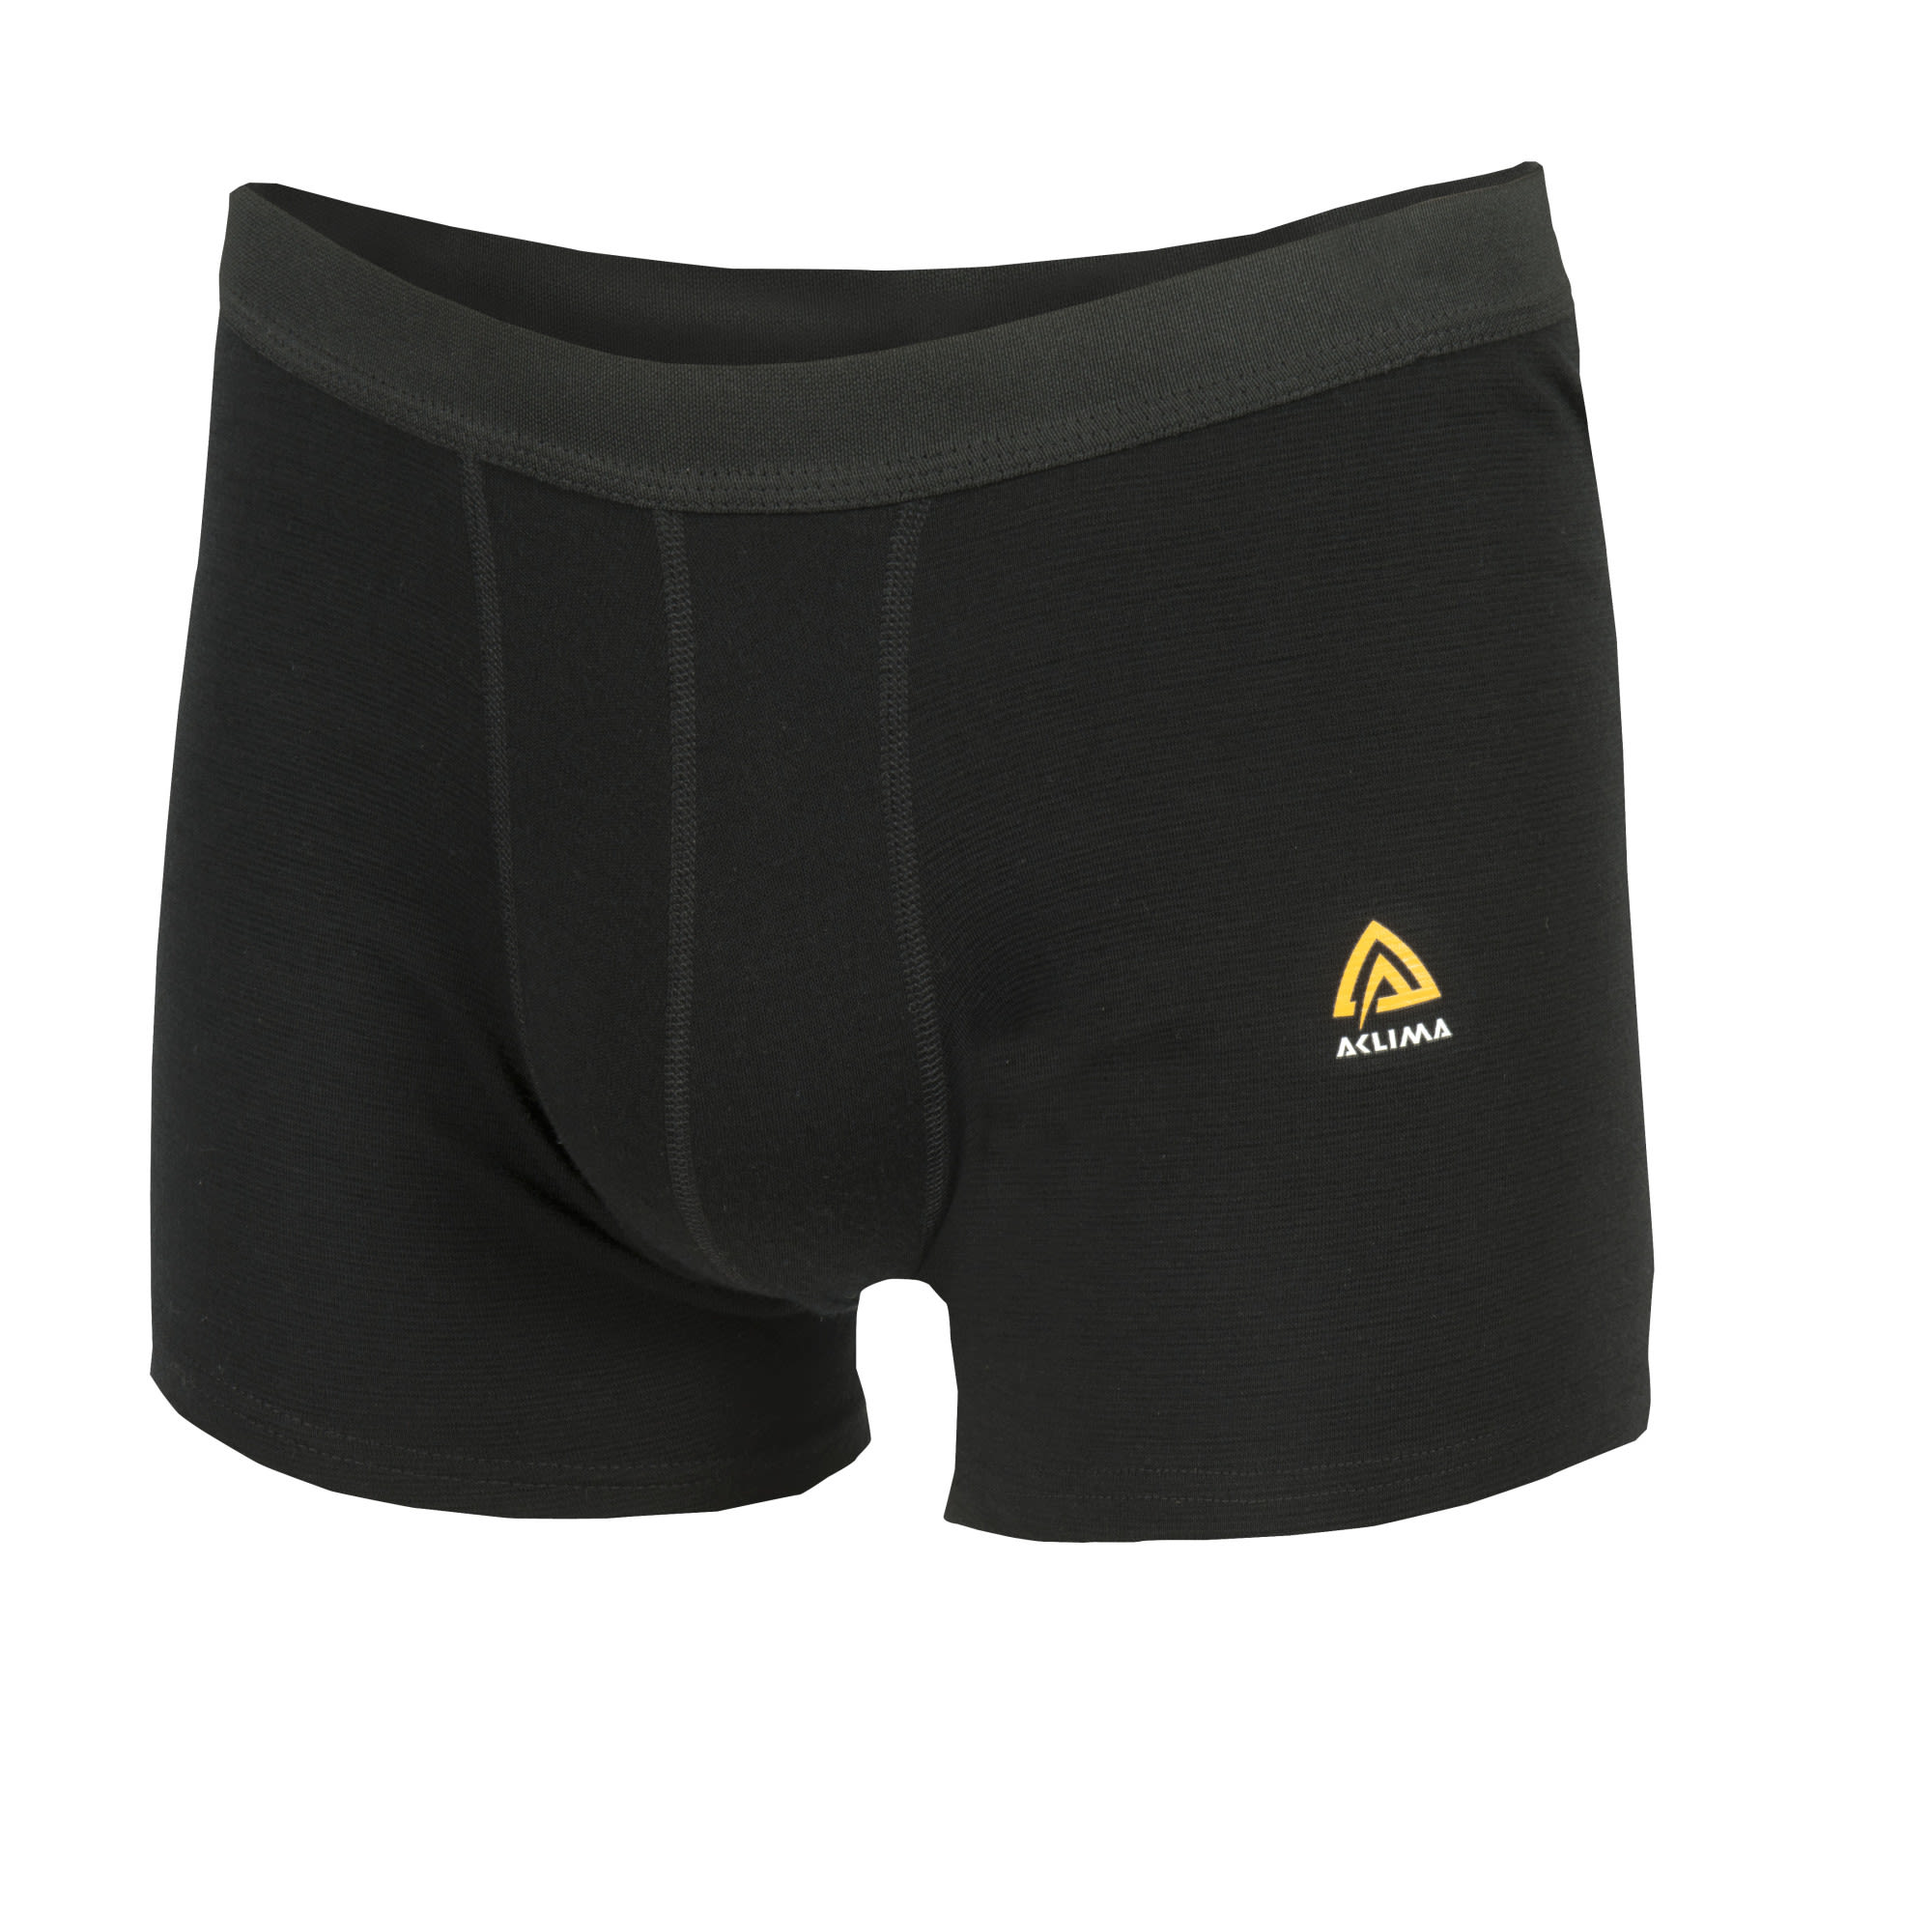 Aclima Warmwool Shorts Schwarz- Male Merino Lange Unterhosen- Grsse XS - Farbe Jet Black unter Aclima